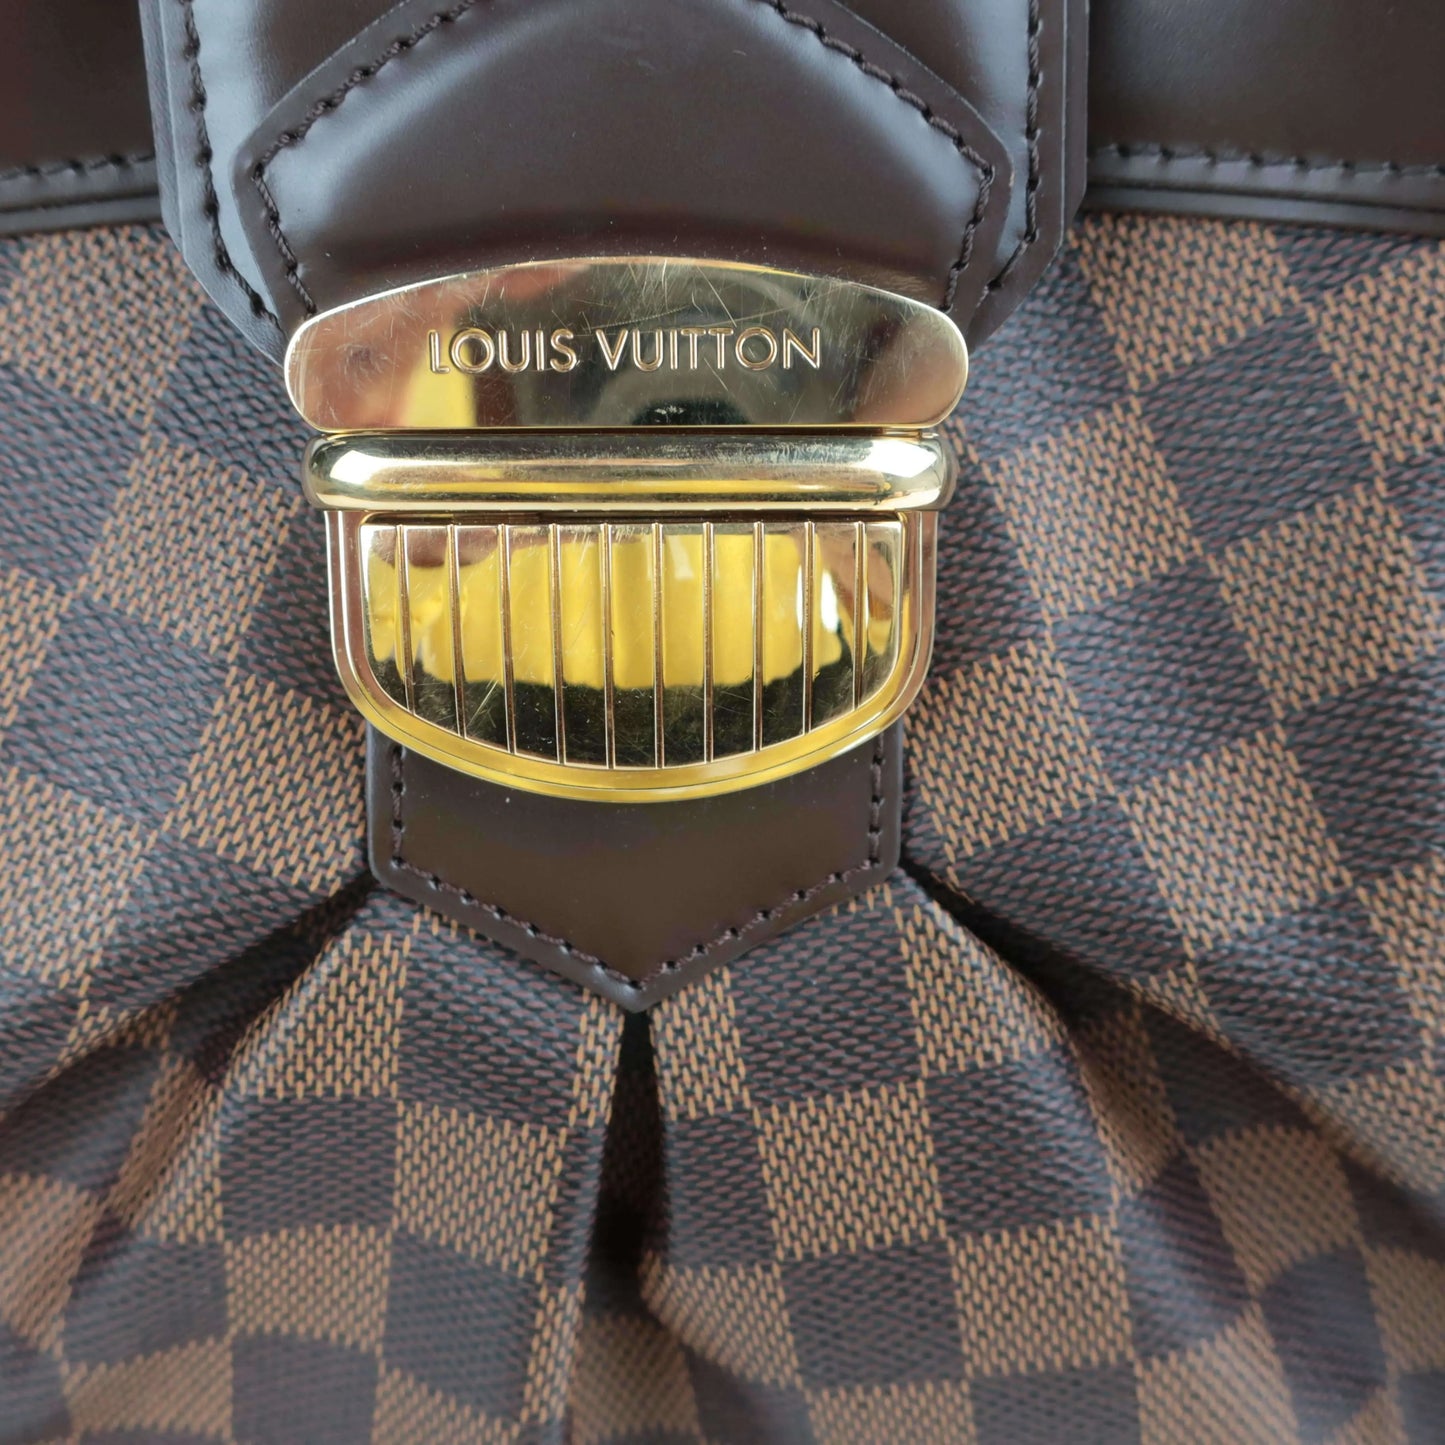 Brand new. Louis Vuitton damier ebene sistina mm